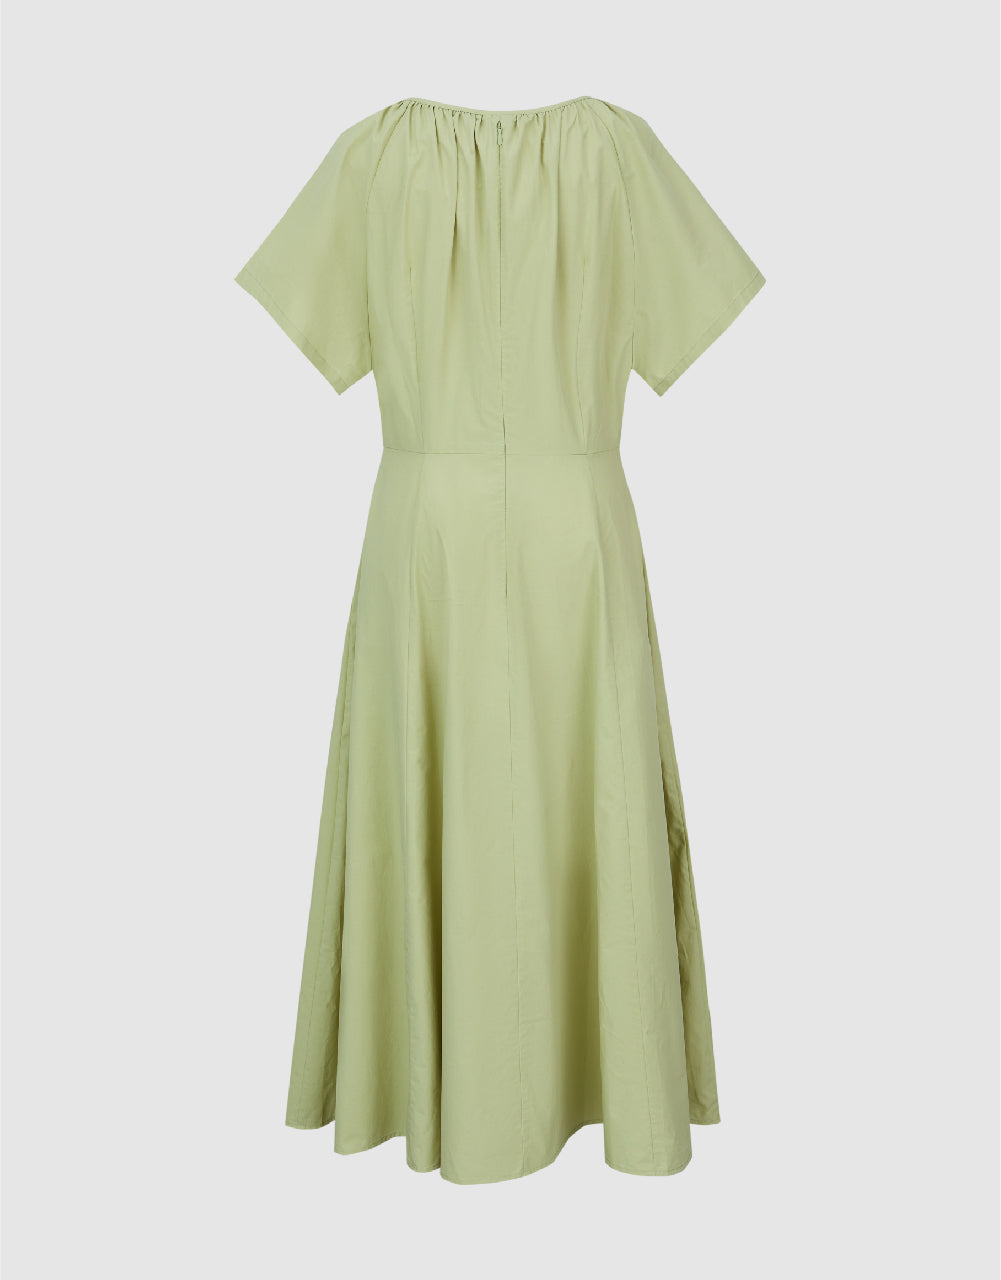 Notch Neck Raglan Sleeve A-Line Dress